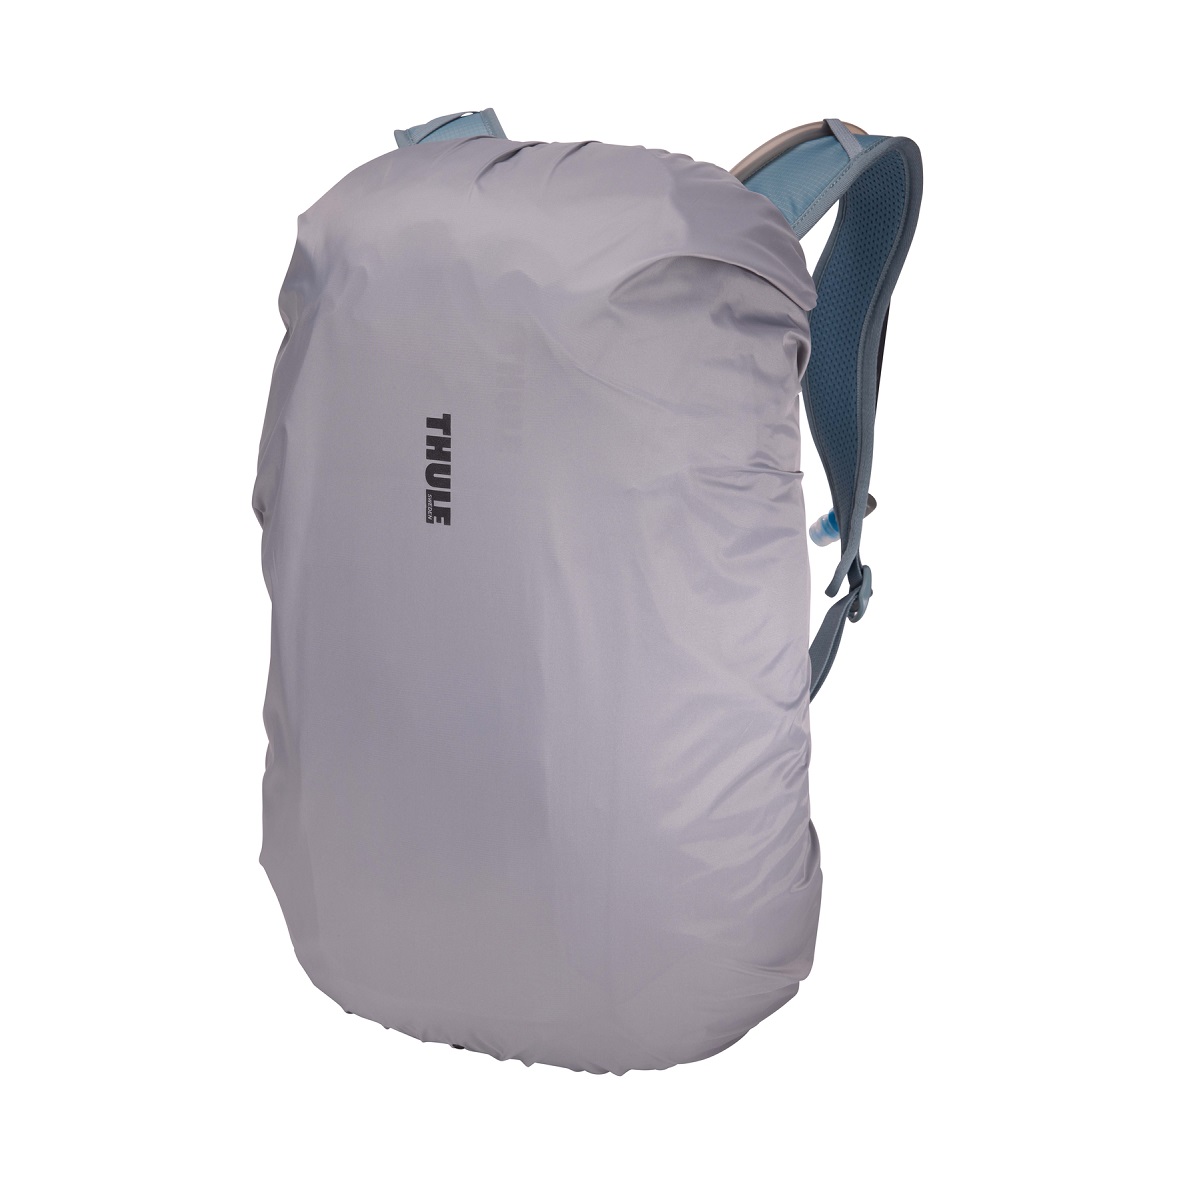 Thule AllTrail hidratacijski ruksak 22 L - plavosivi